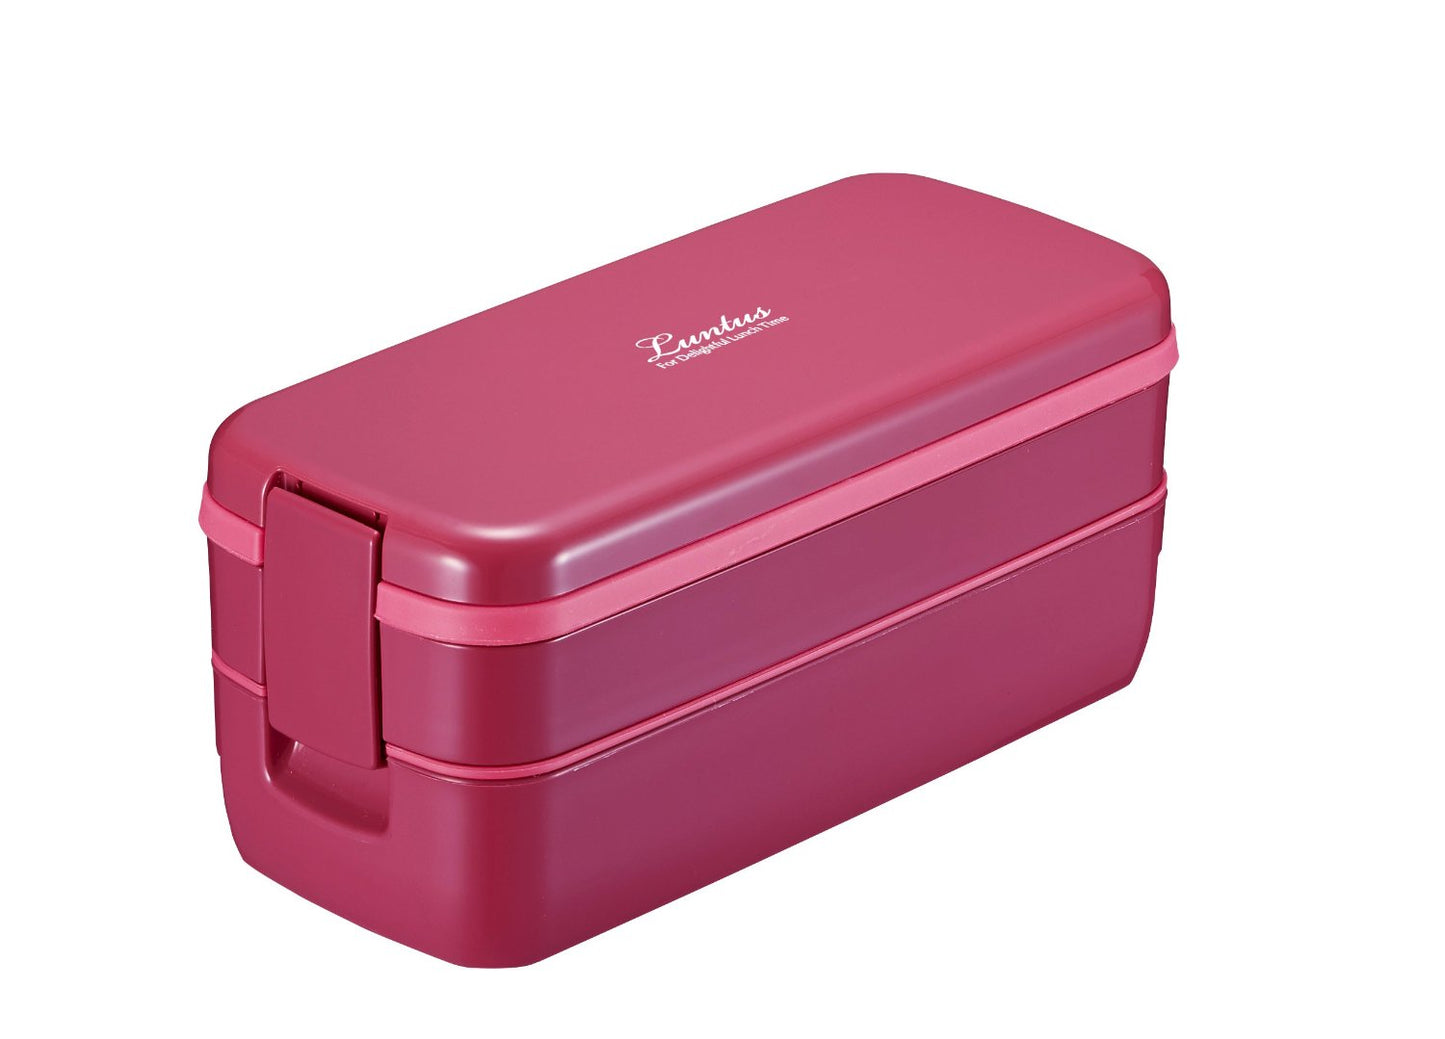 Asvel Luntus FL L. Lunch Box (SS-T640) - Red